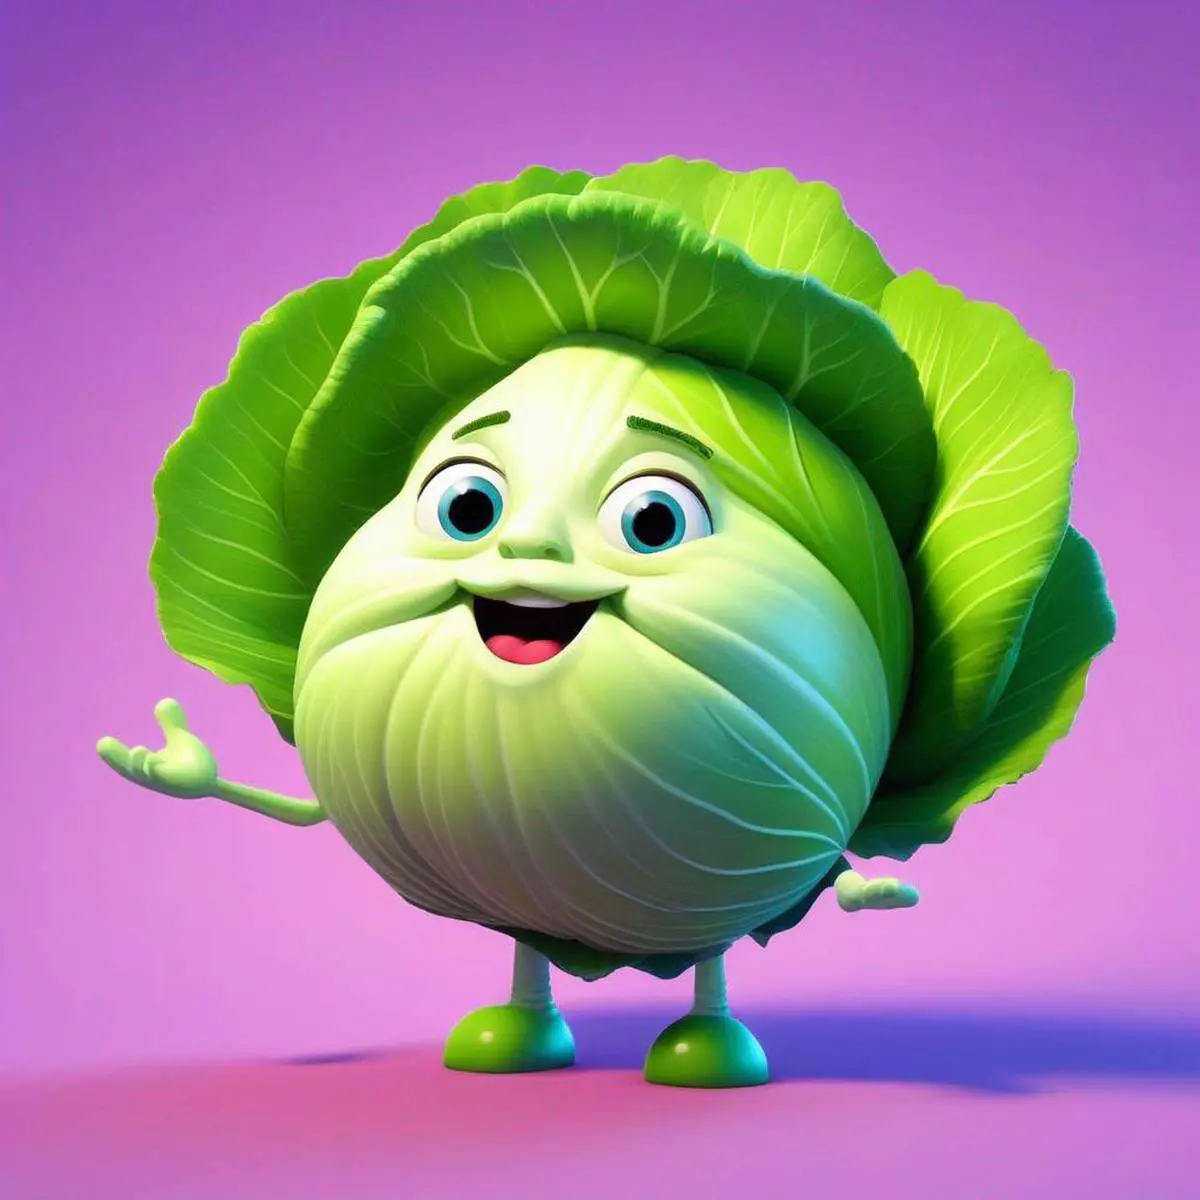 Cabbage puns